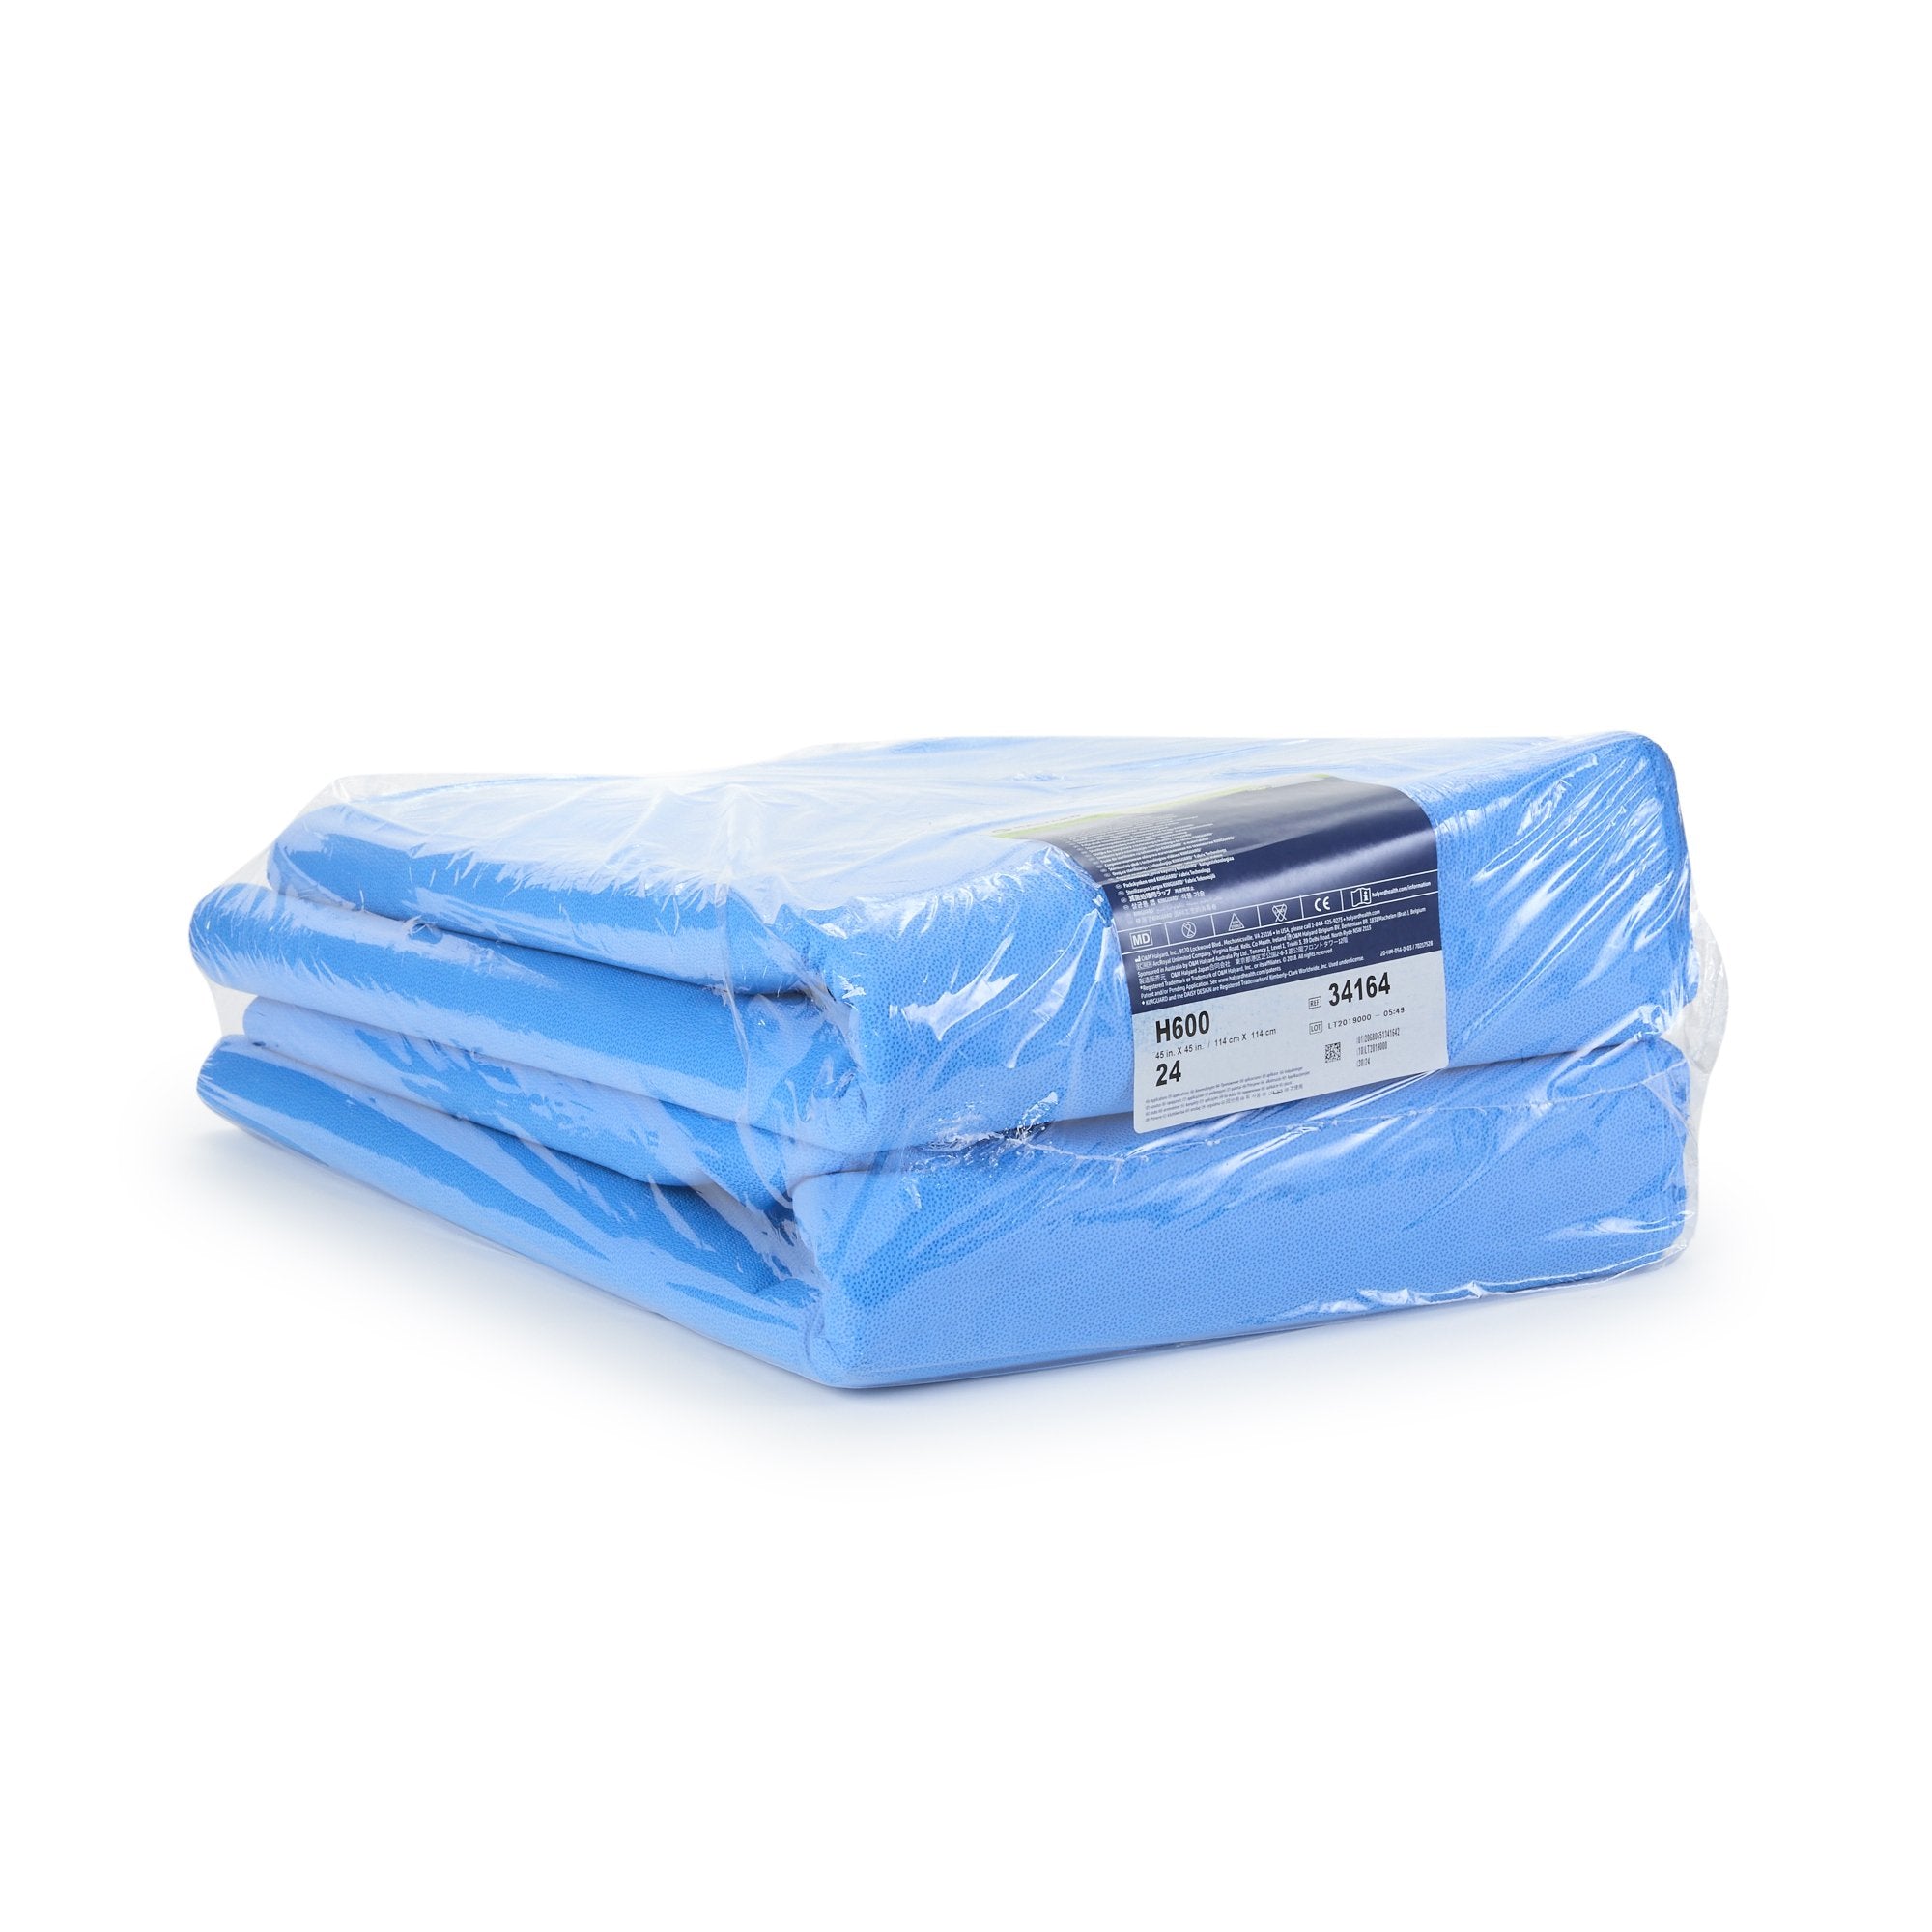 QUICK CHECK* H600 Sterilization Wrap White / Blue 45 X 45 Inch Dual Layer SMS Polypropylene Steam / EO Gas / Hydrogen Peroxide